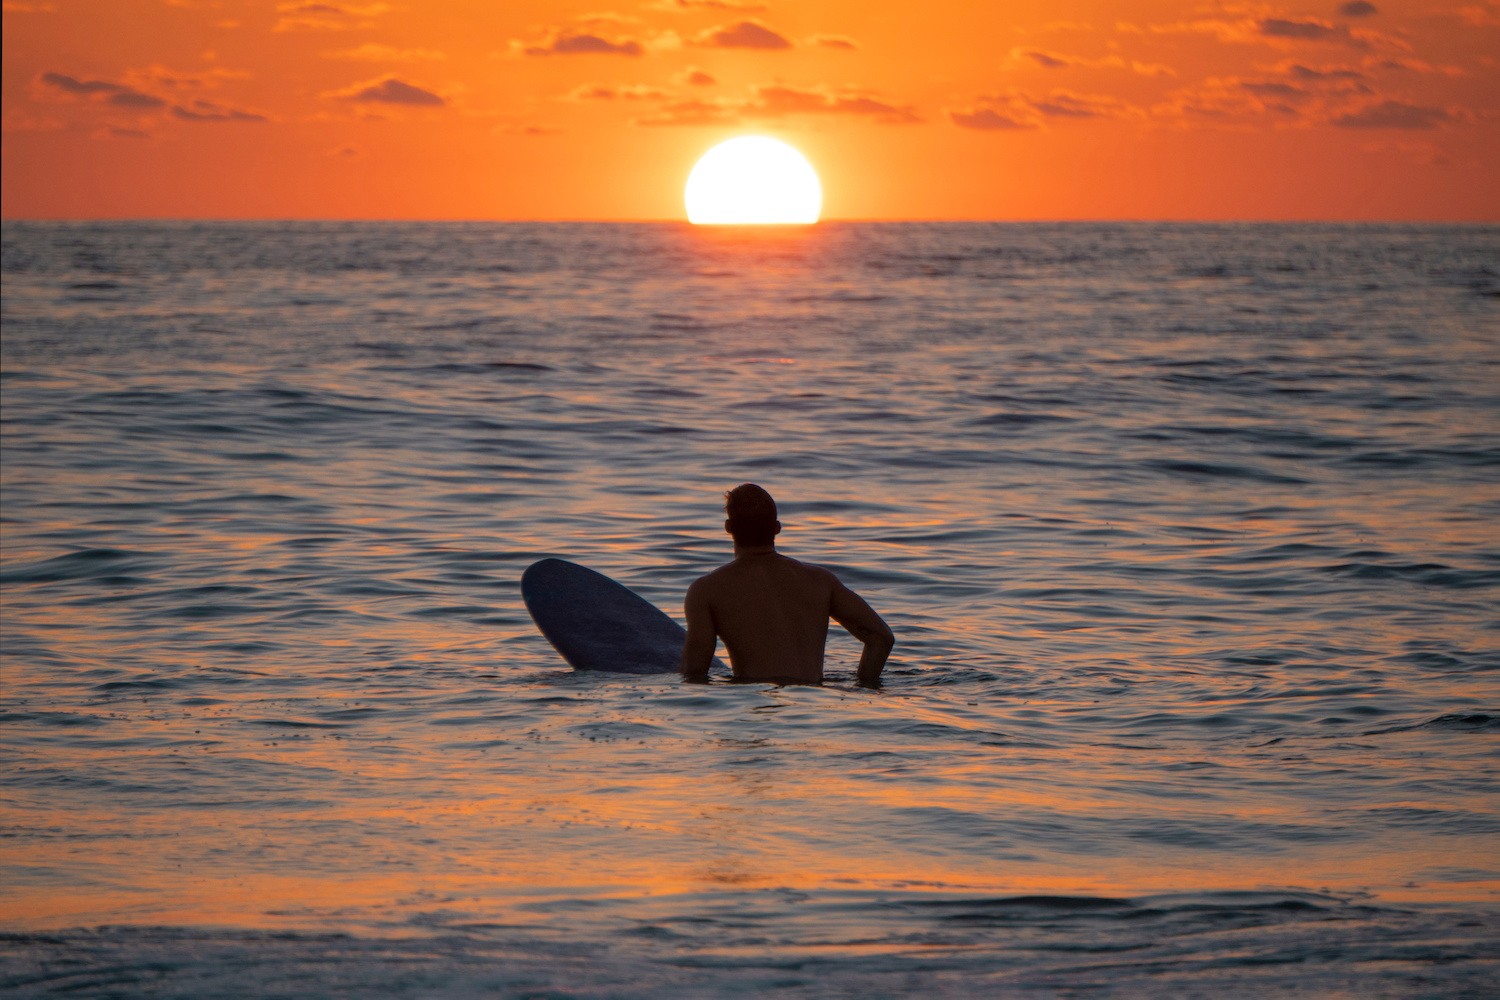 Longboard surfer at a Baja California surf spot at sunset or sunrise 